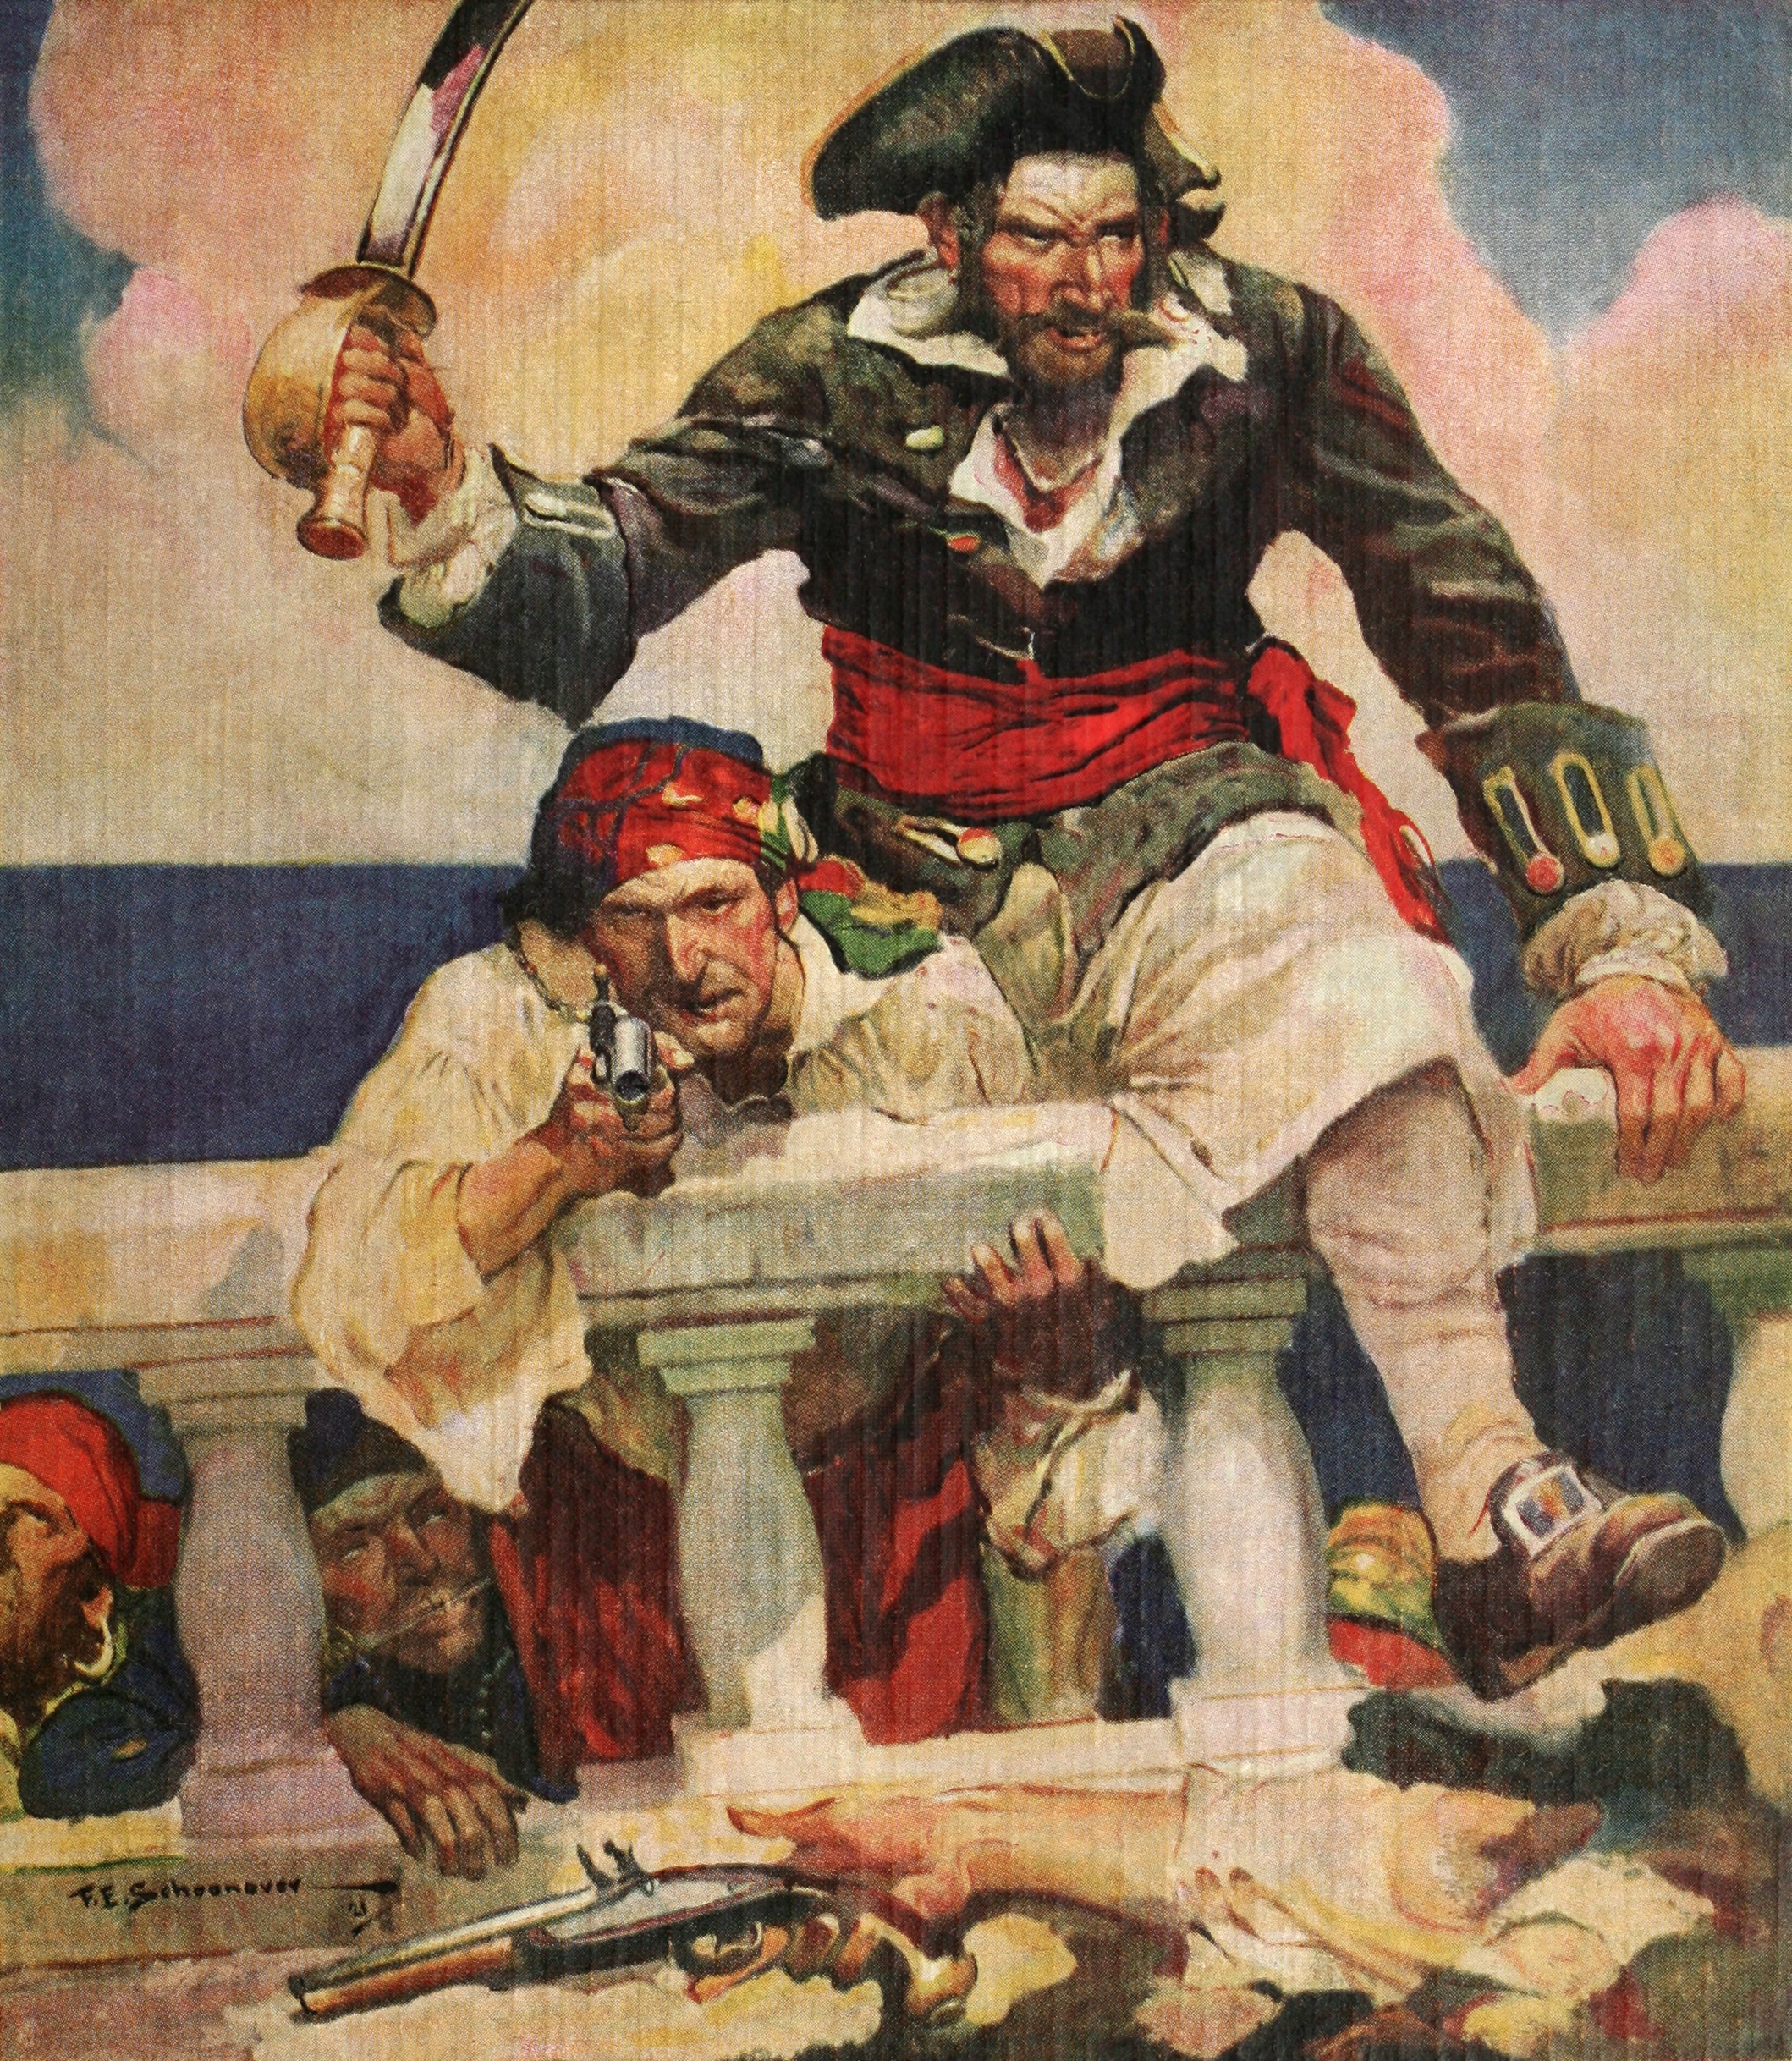 Blackbeard and Piracy